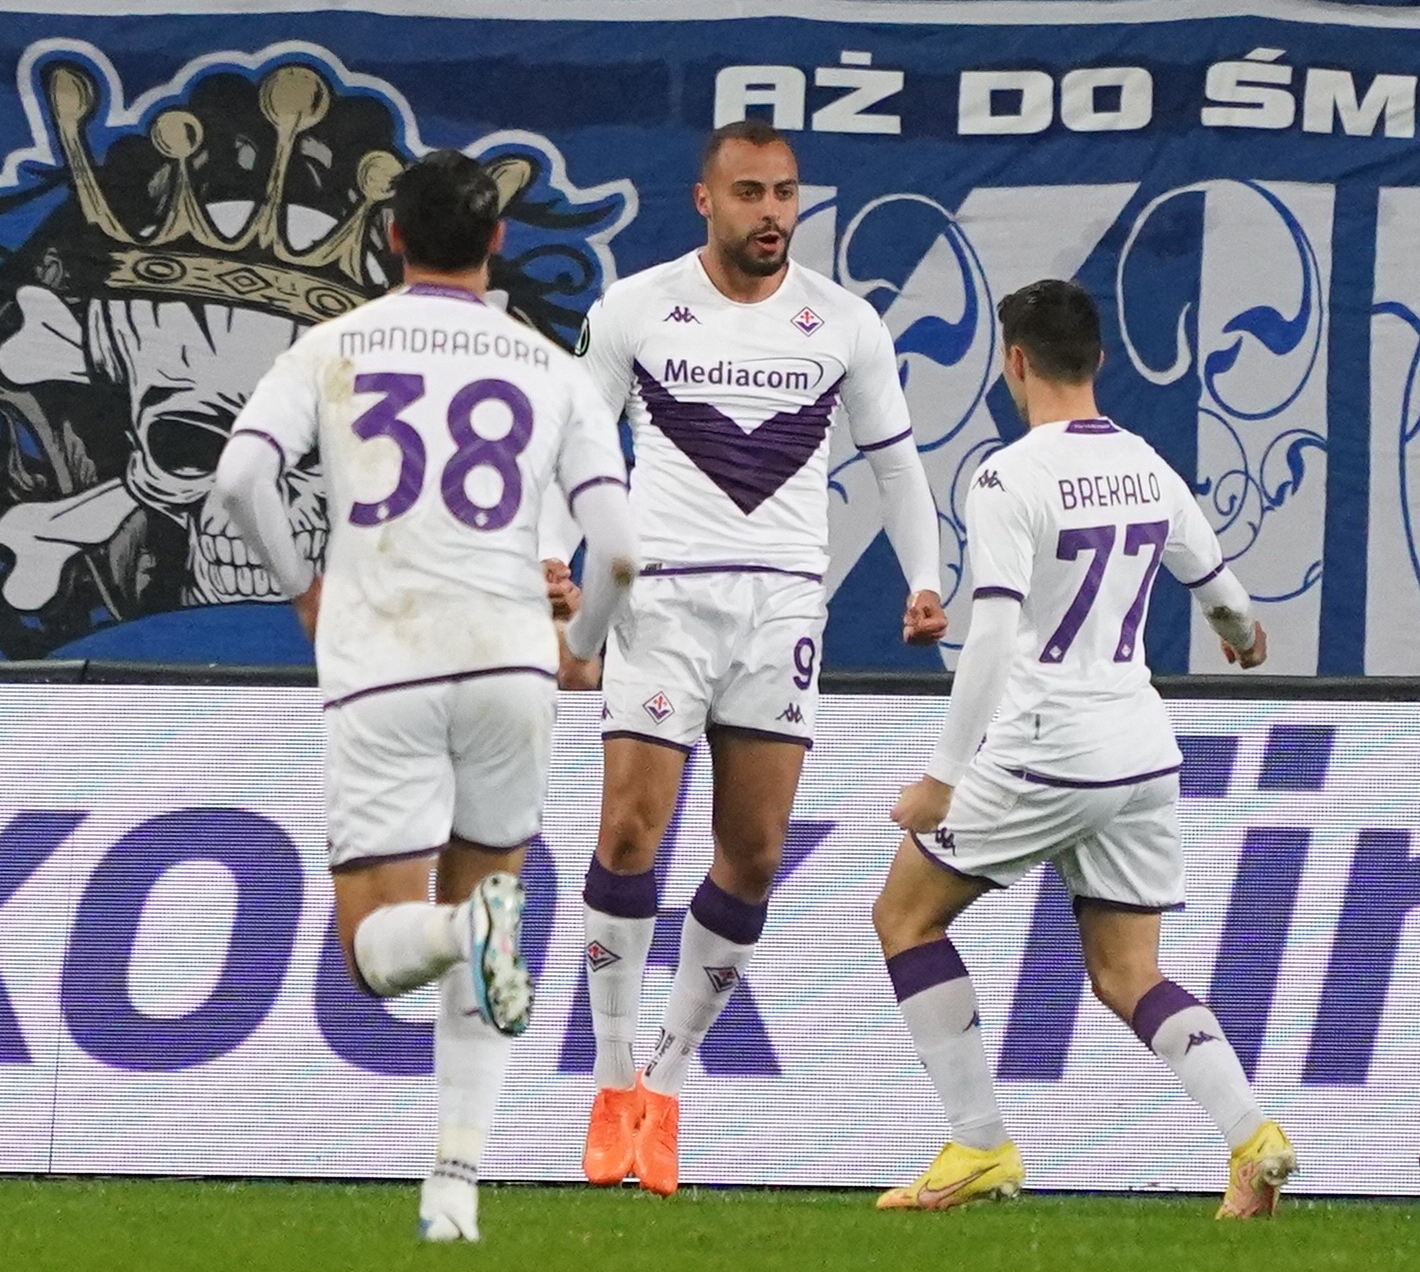 Grêmio vs São Luiz: A Clash of Titans in the Gauchão Championship